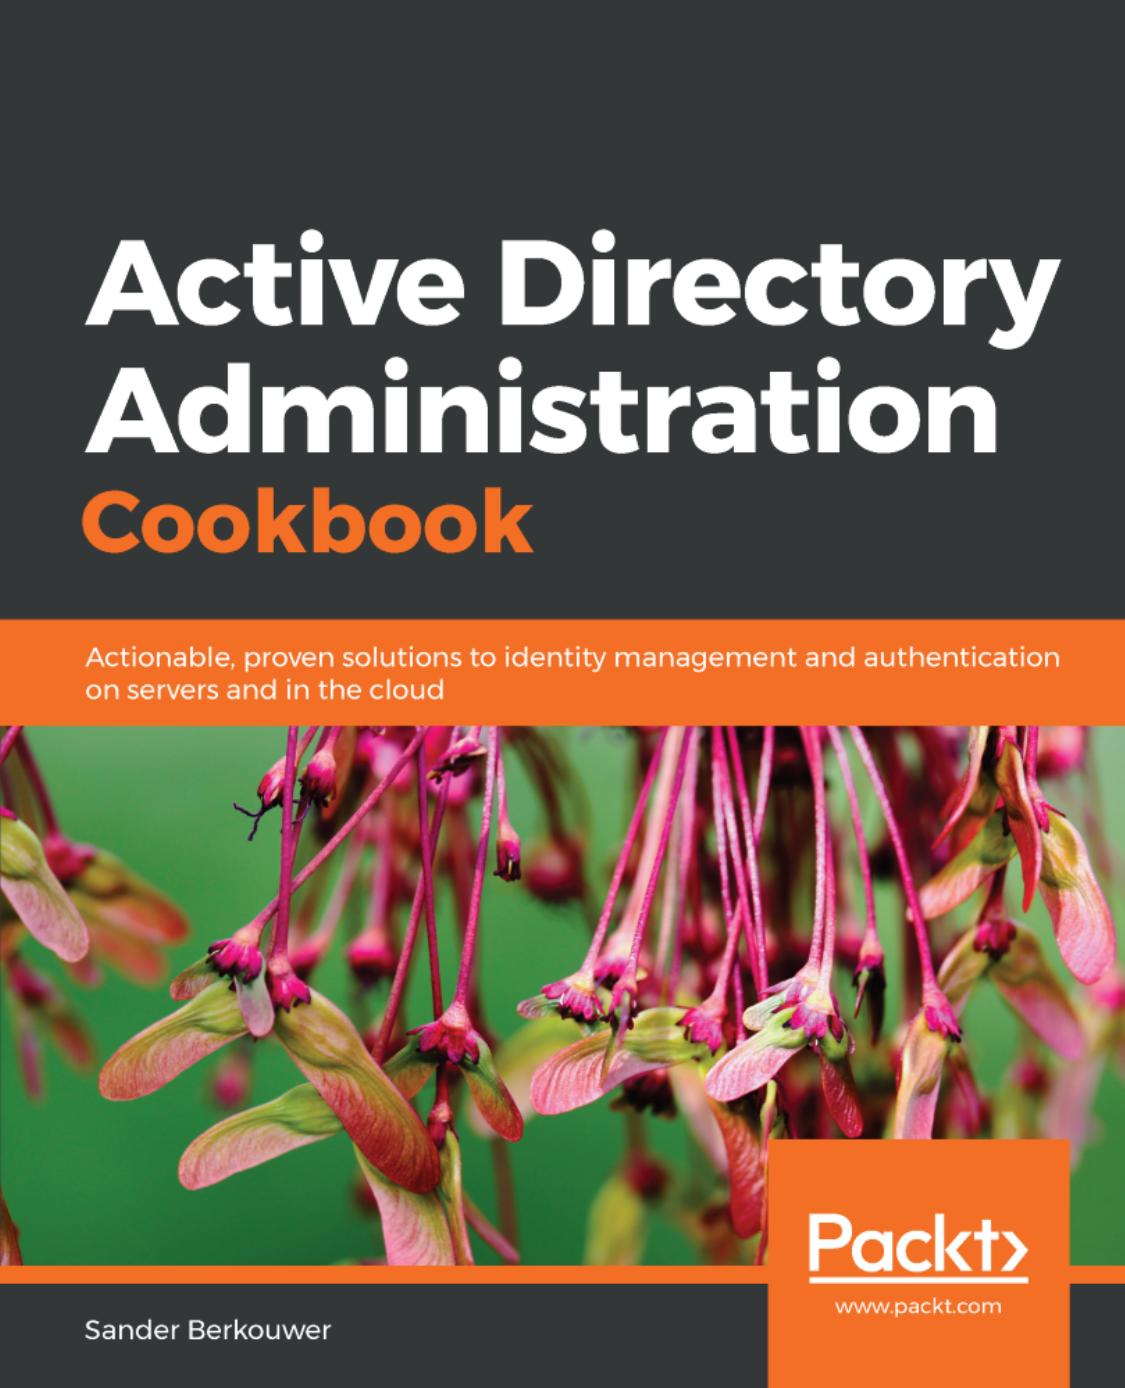 Active Directory Administration Cookbook by Sander Berkouwer